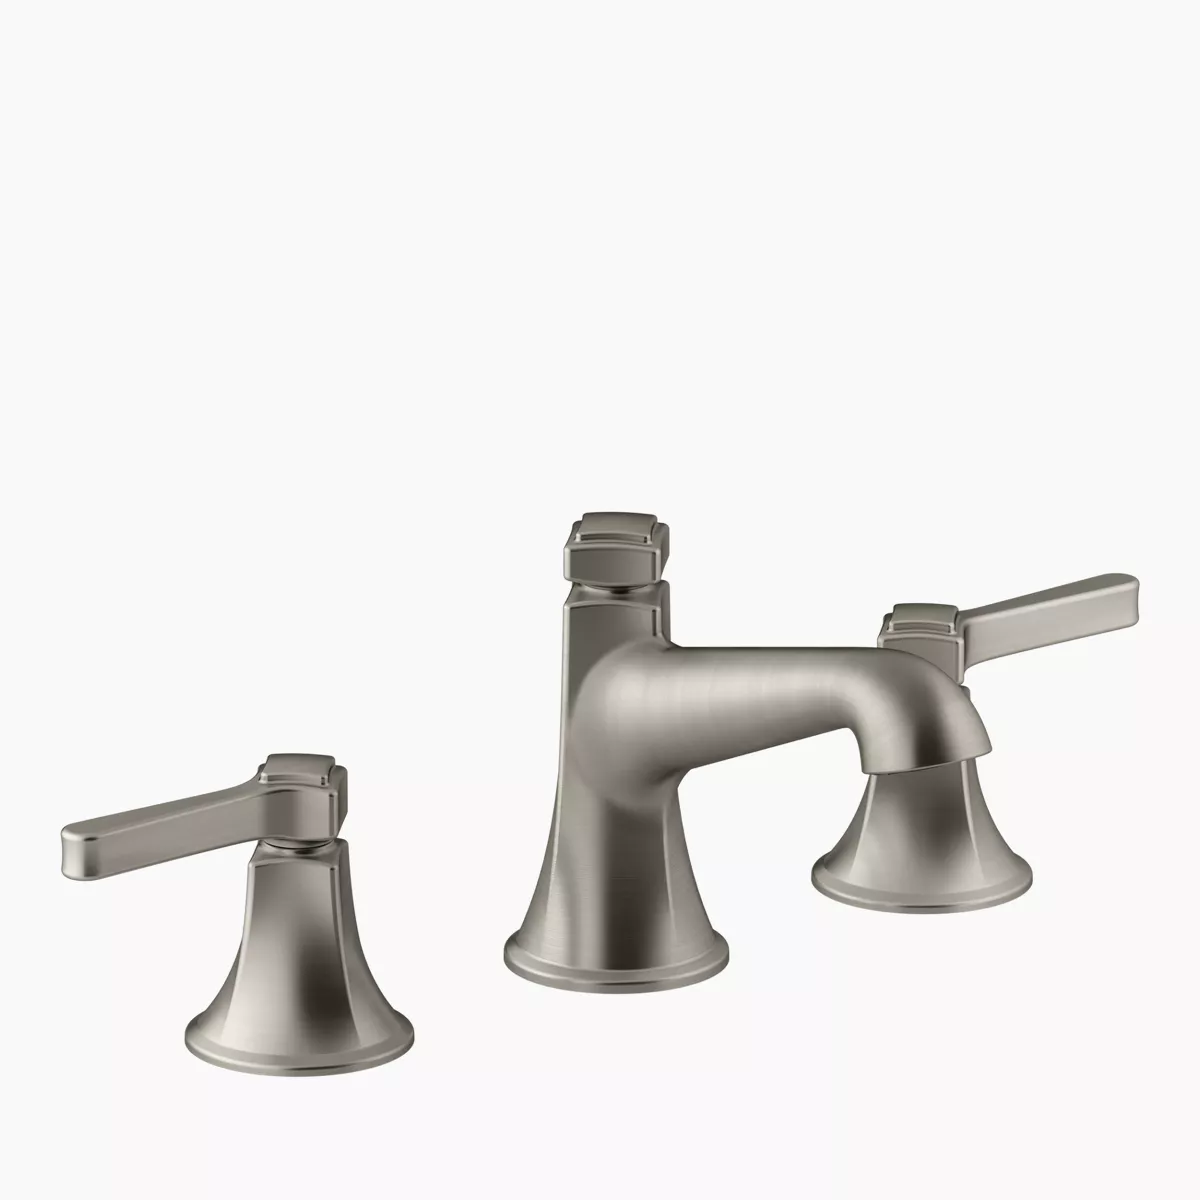 KOHLER | K-5798-4 | Ballad Utility Sink with Four Faucet Holes